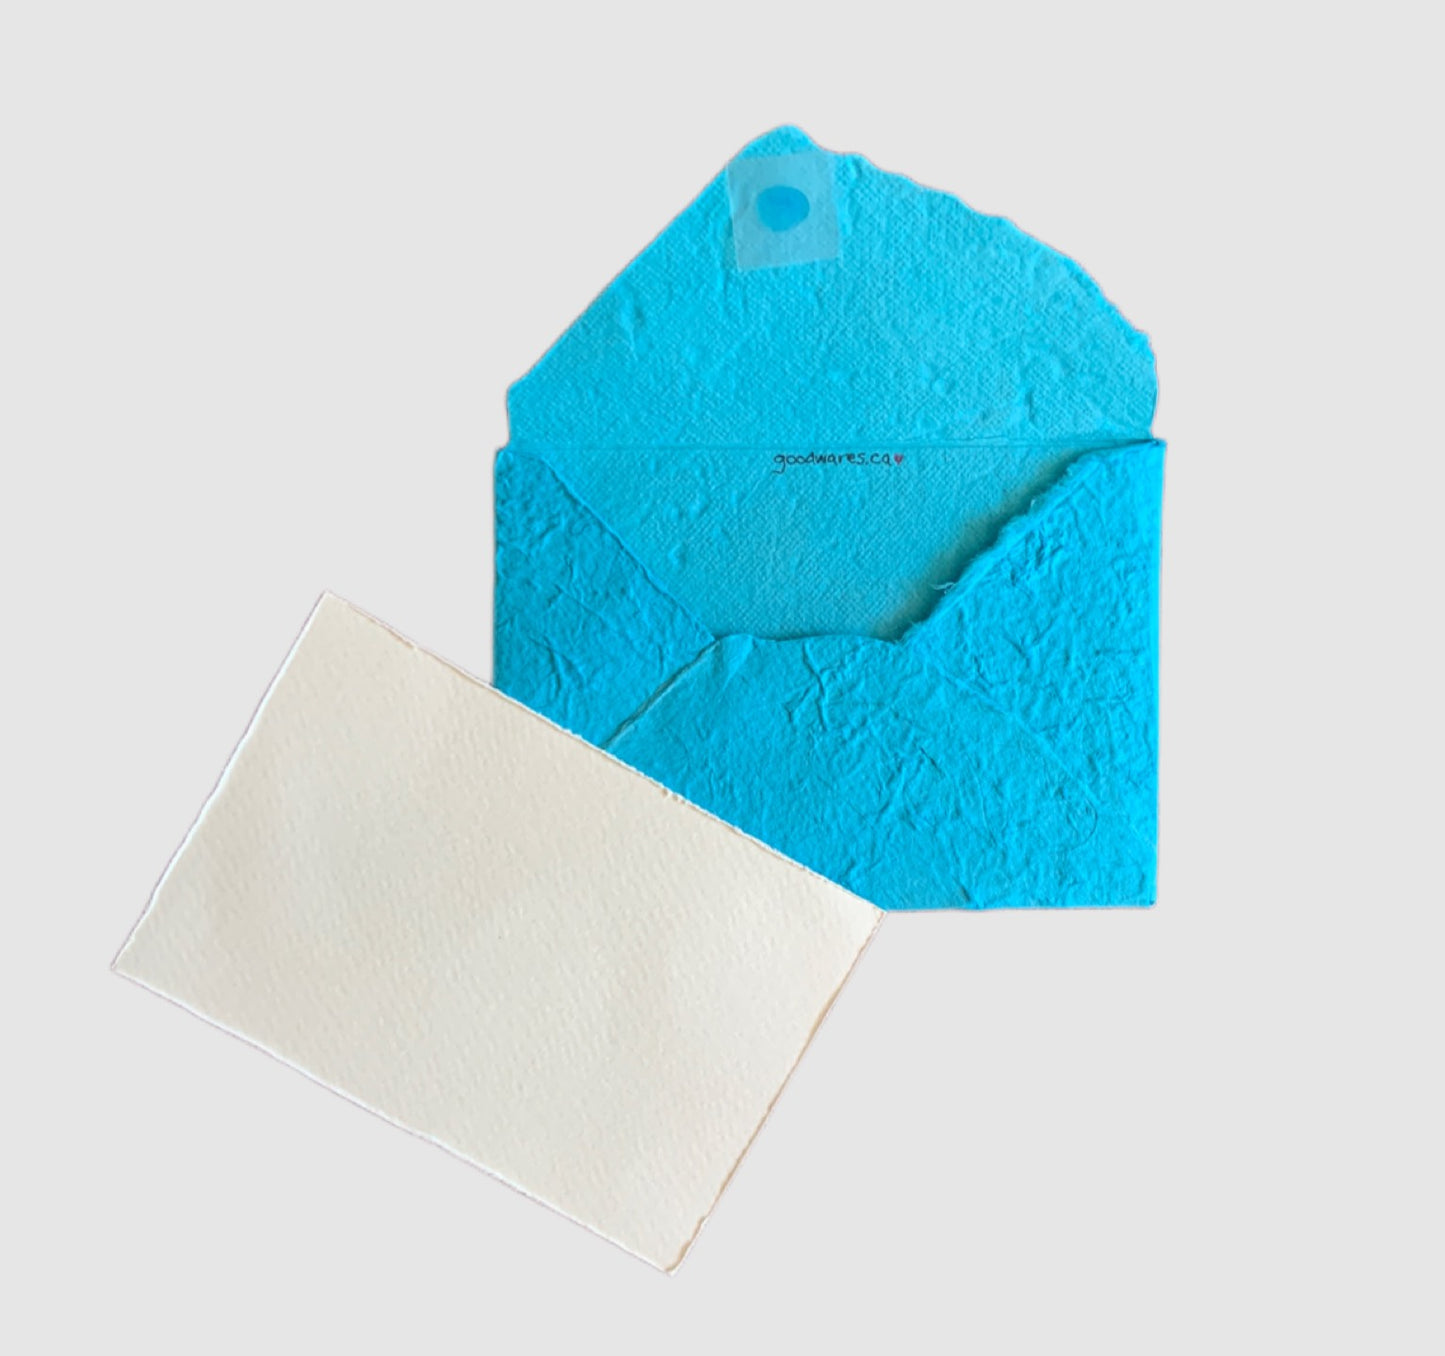 Envelope - Blue Textured - Exotic Handmade Paper